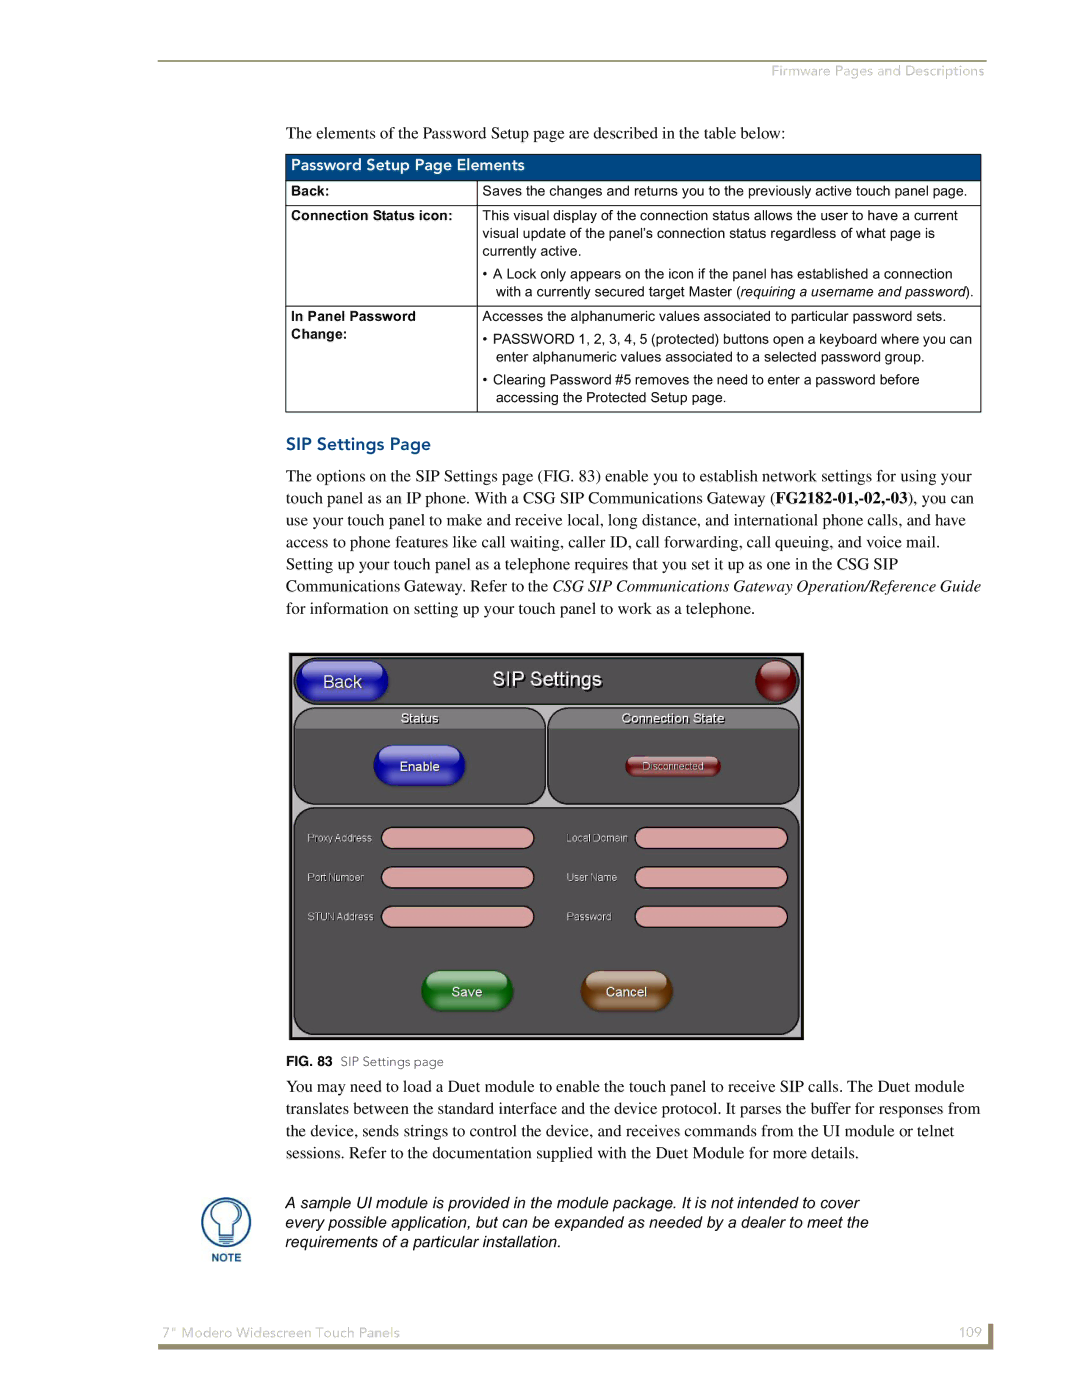 AMX NXD-700Vi manual SIP Settings, Password Setup Page Elements, Panel Password, Change 